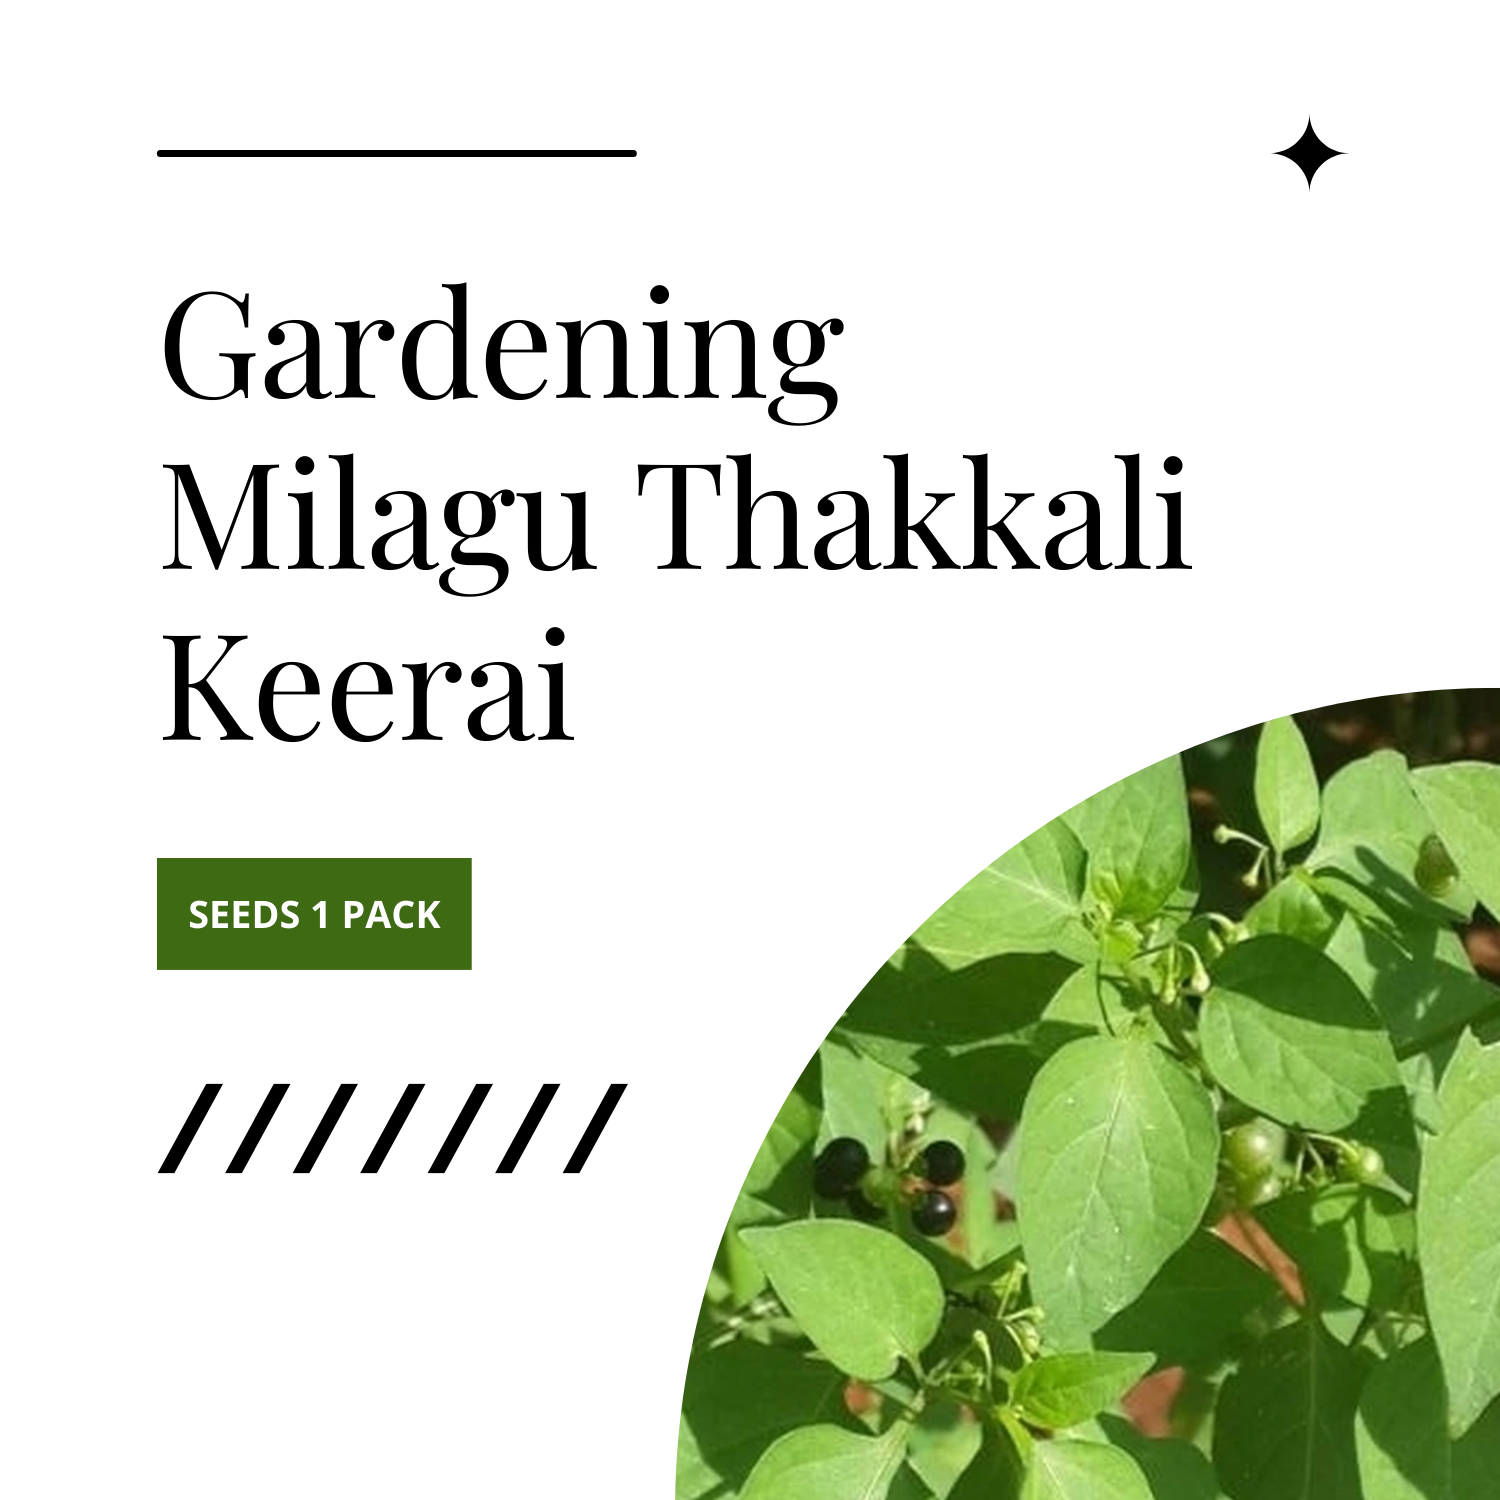 Gardening Milagu Thakkali Keerai Seeds 1 Pack